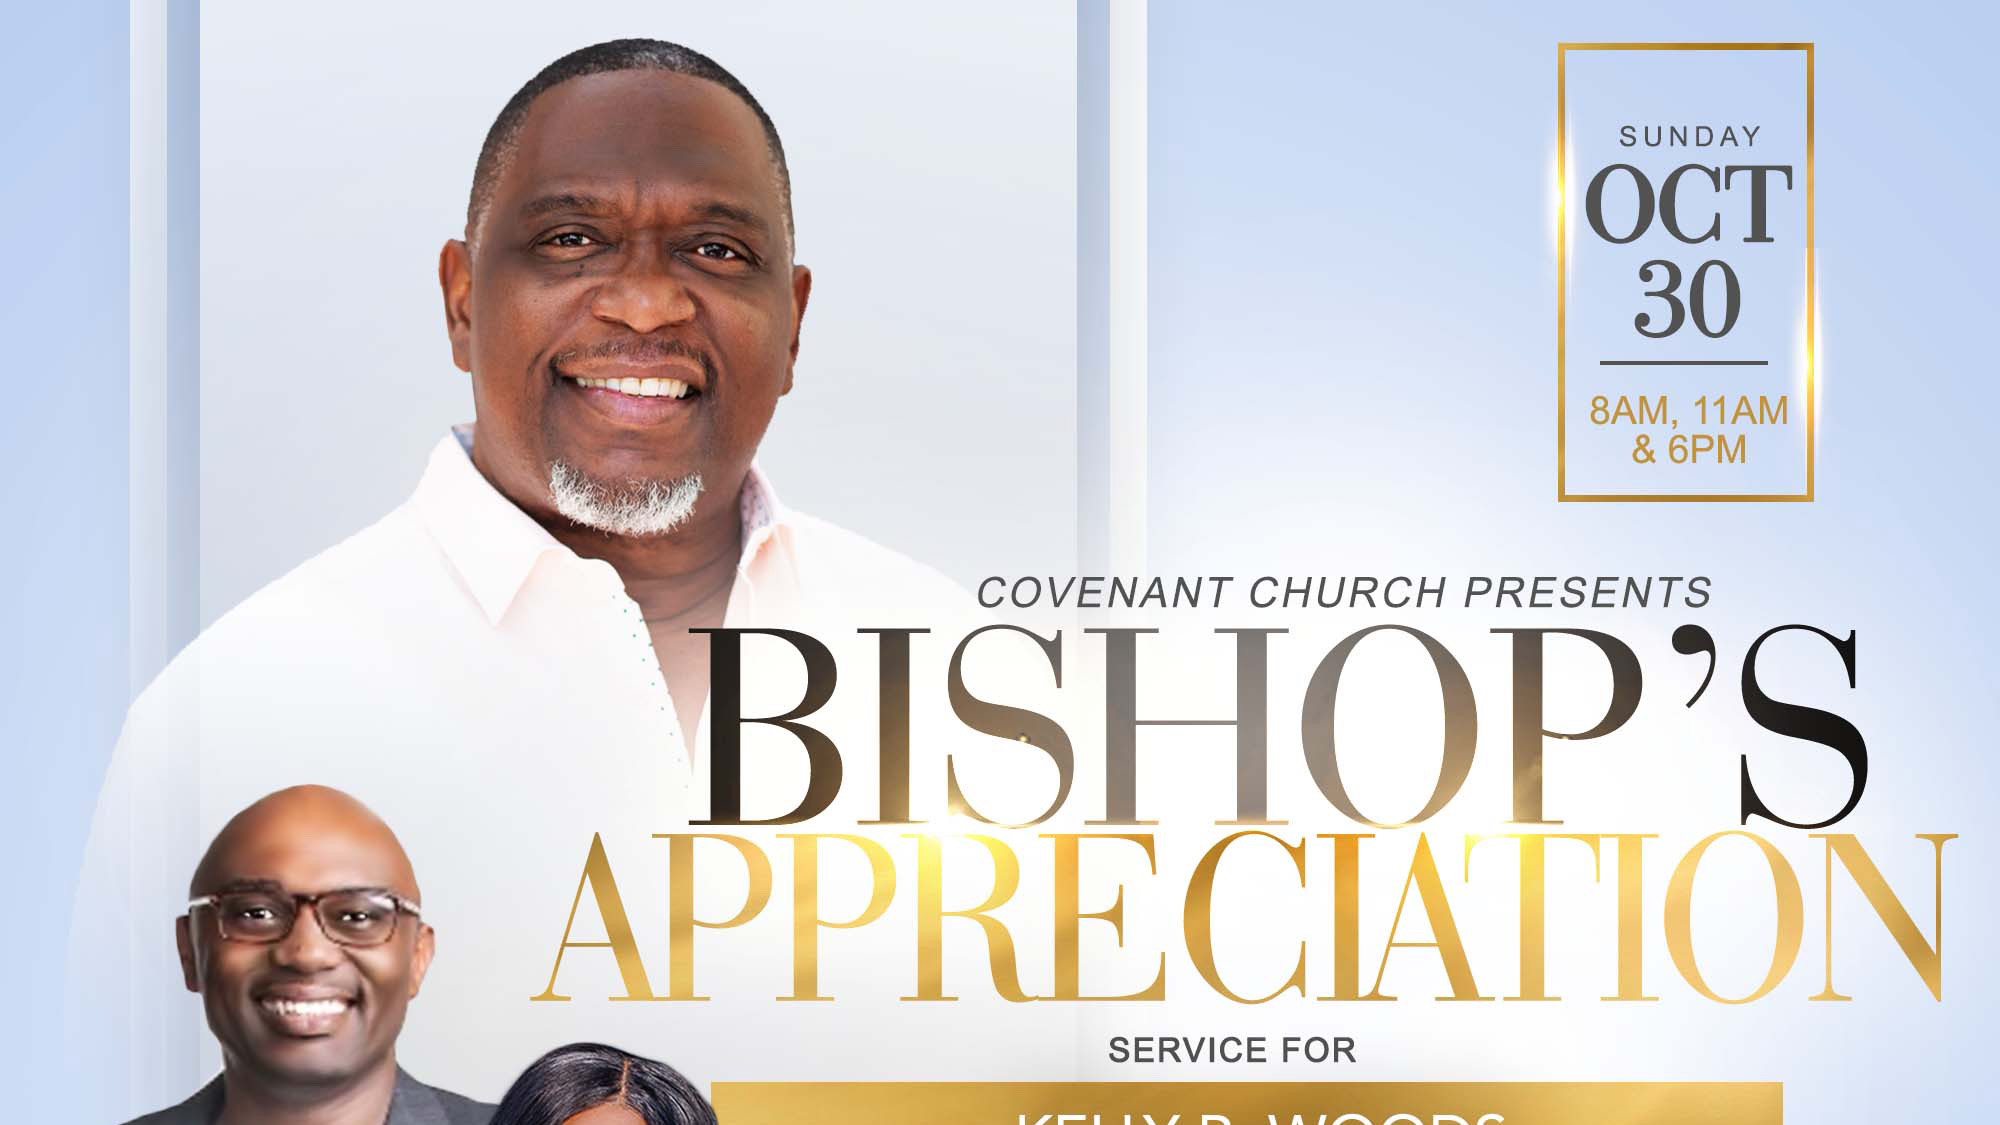 Bishop Woods' Appreciation Service